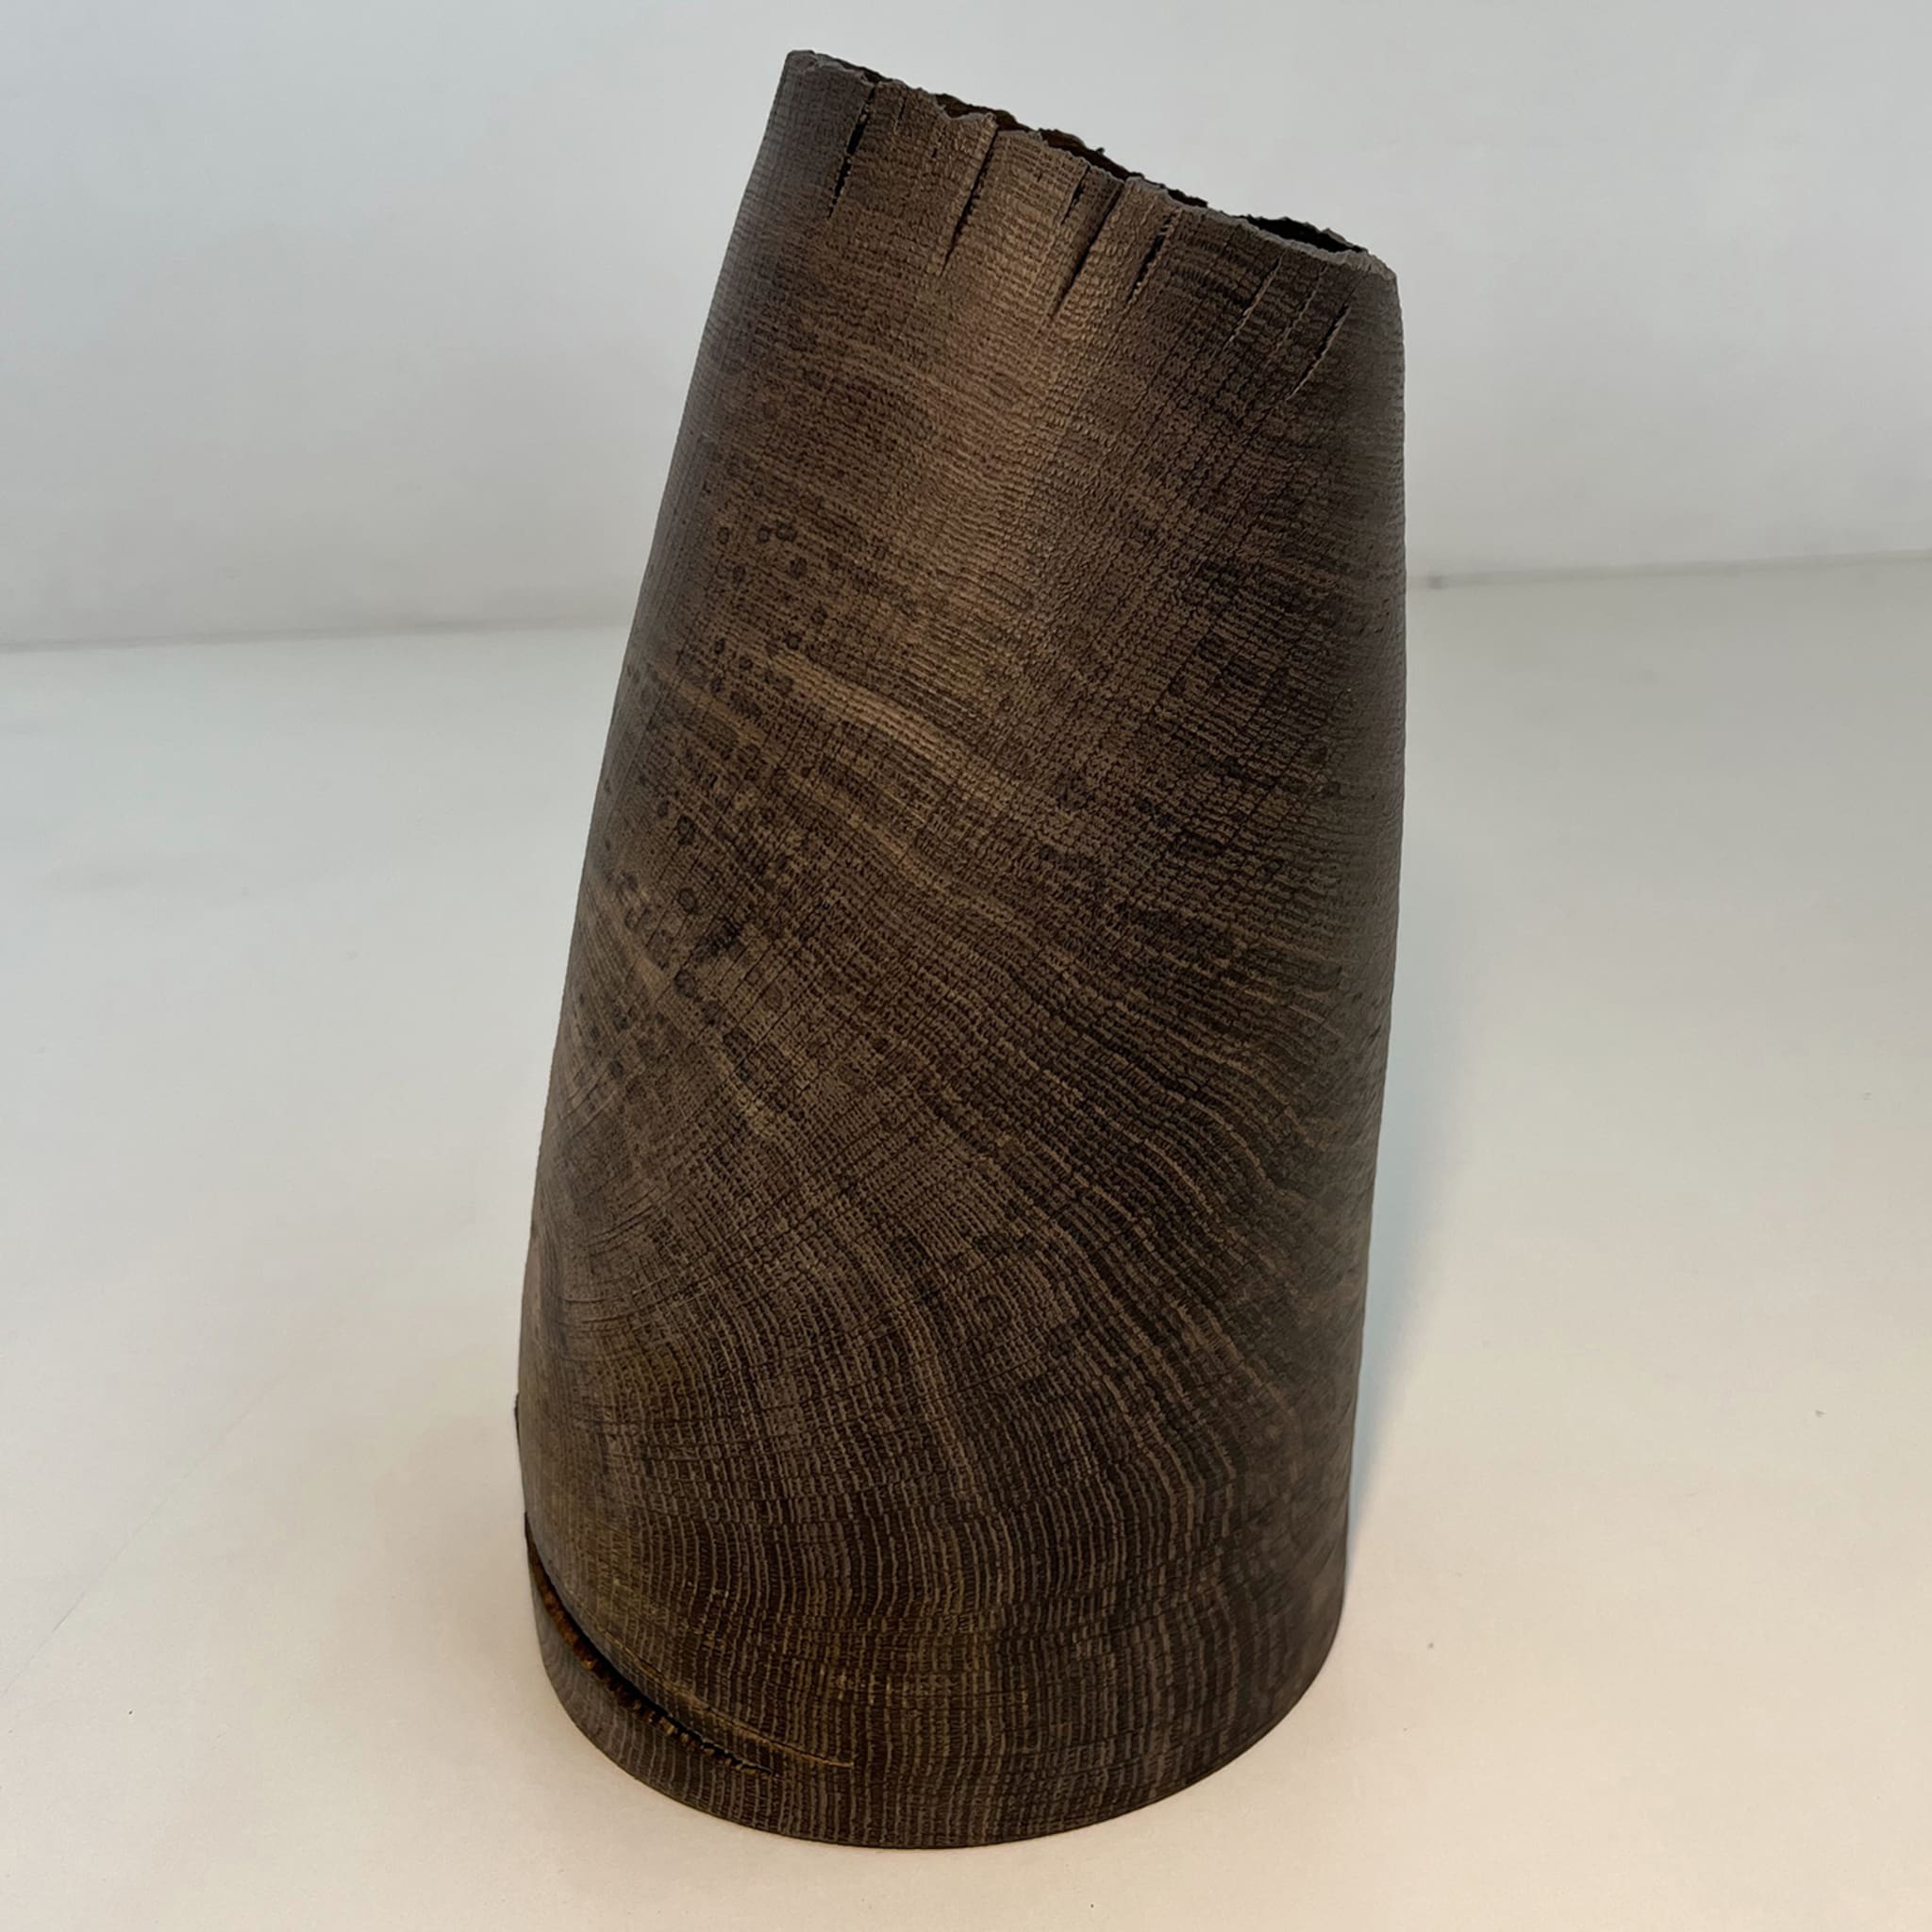 Fossil Oak Hollow Vase #2 - Alternative view 4